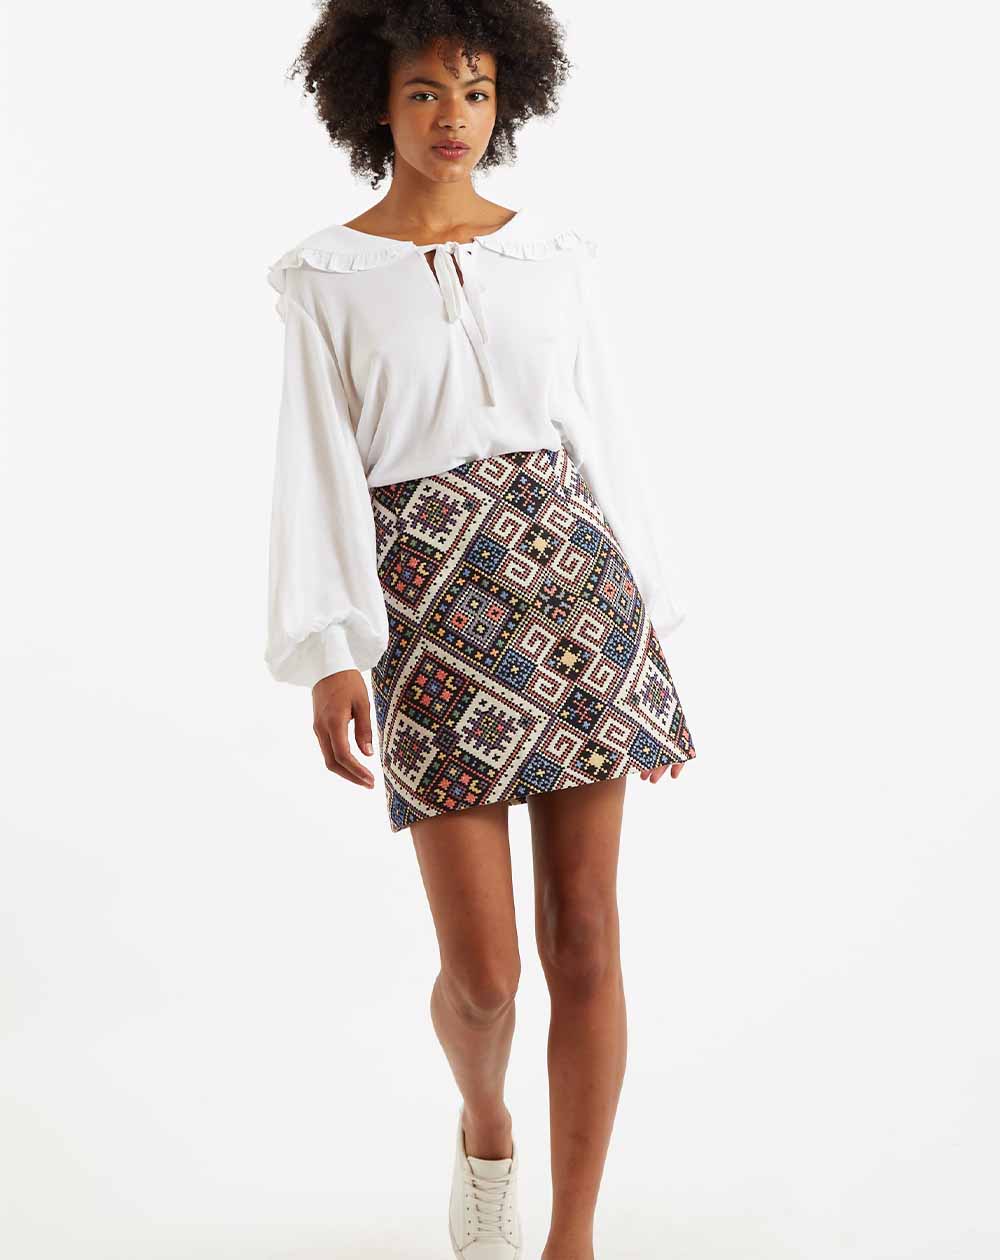 Louche Aubin Tex Mex Jacquard A-Line Mini Skirt in multi